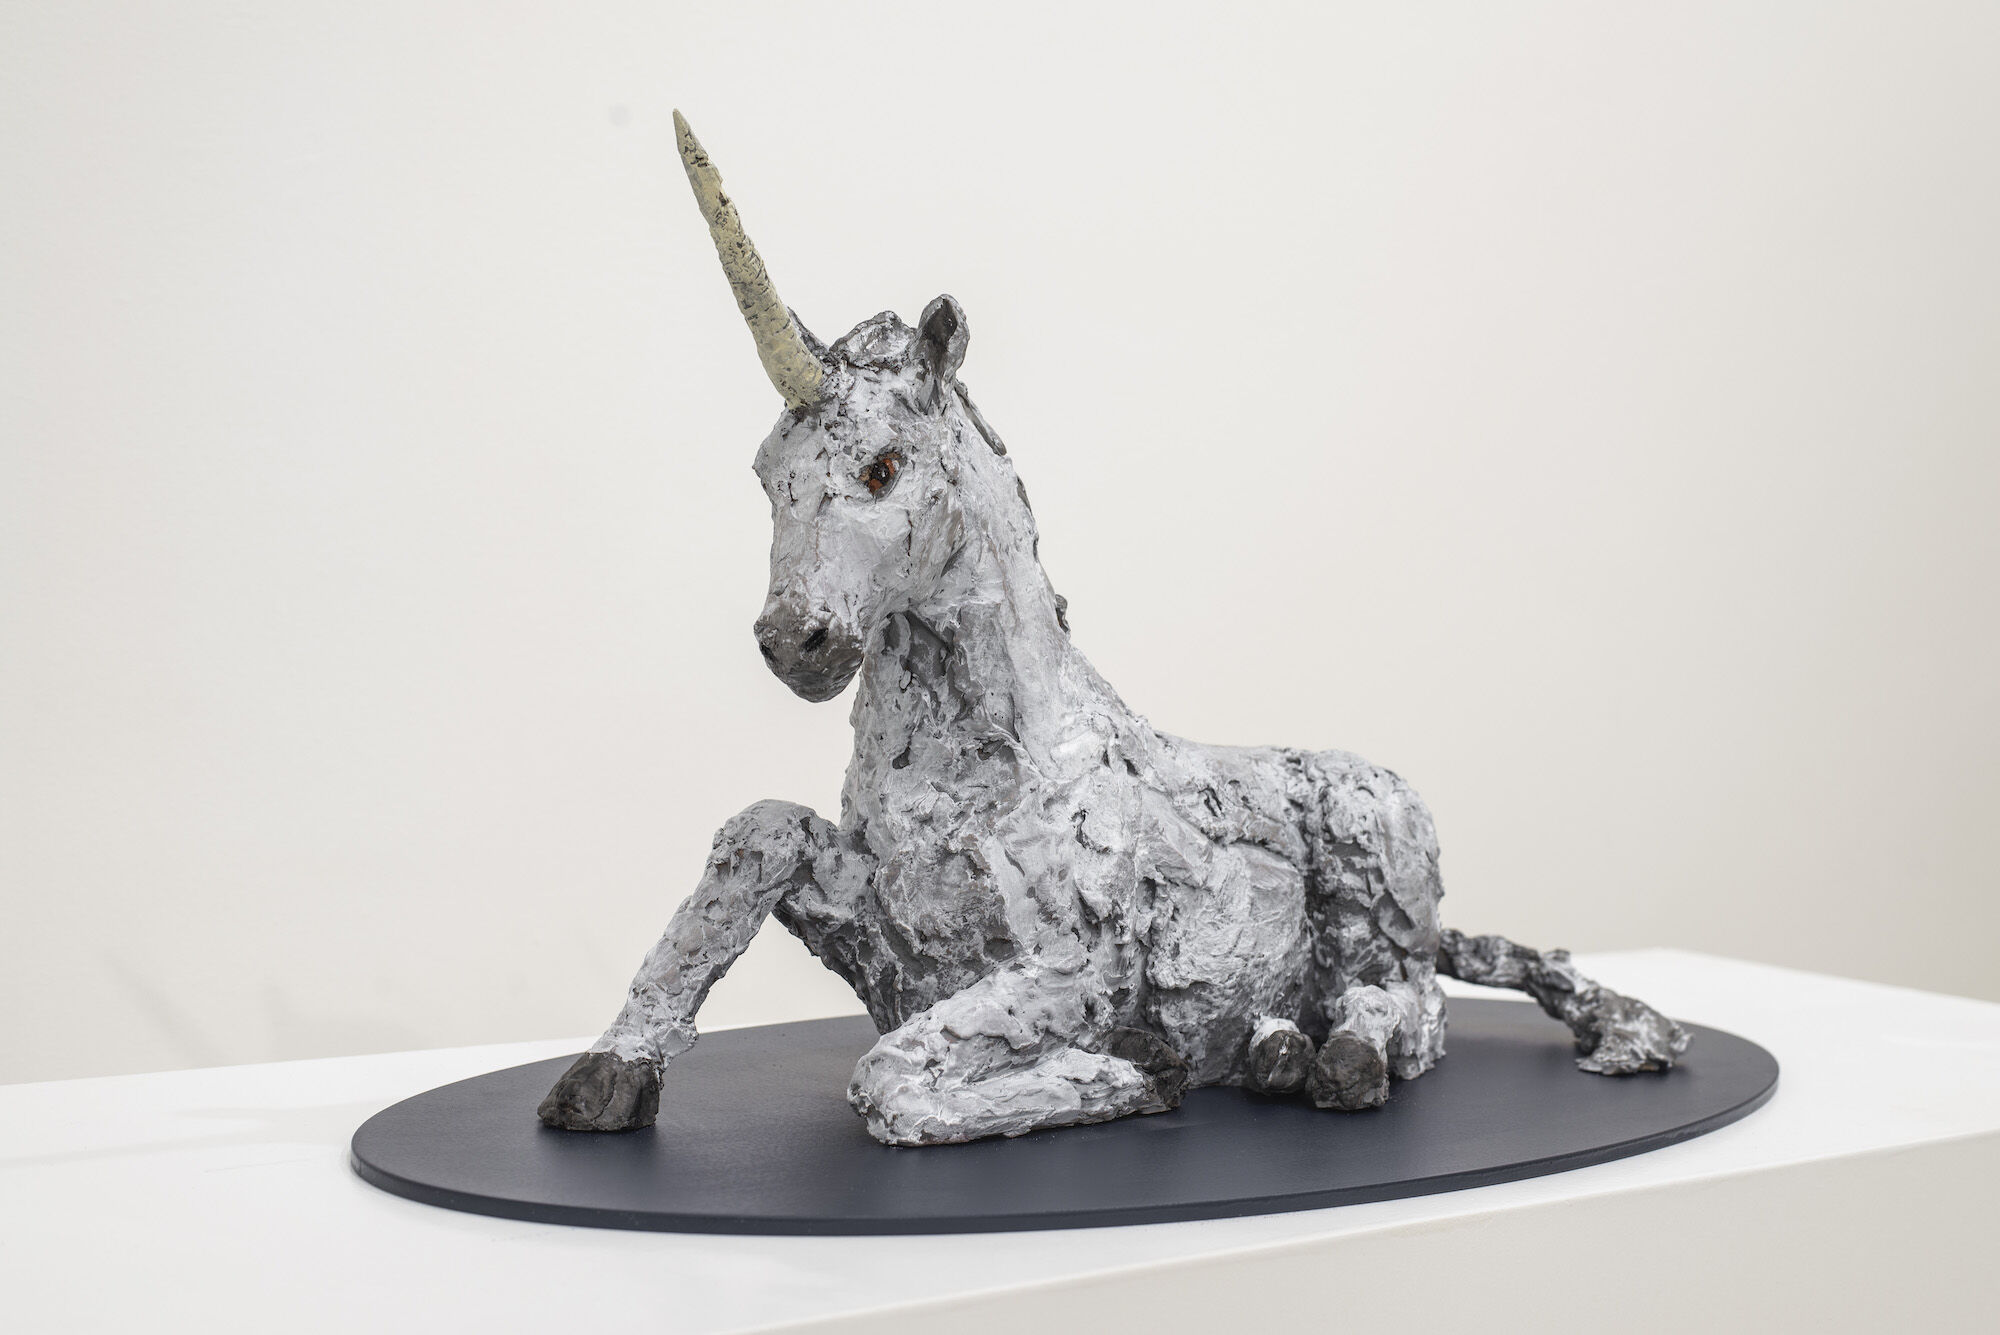 Sculpture "Unicorn" (2020), bronze by Stephan Balkenhol